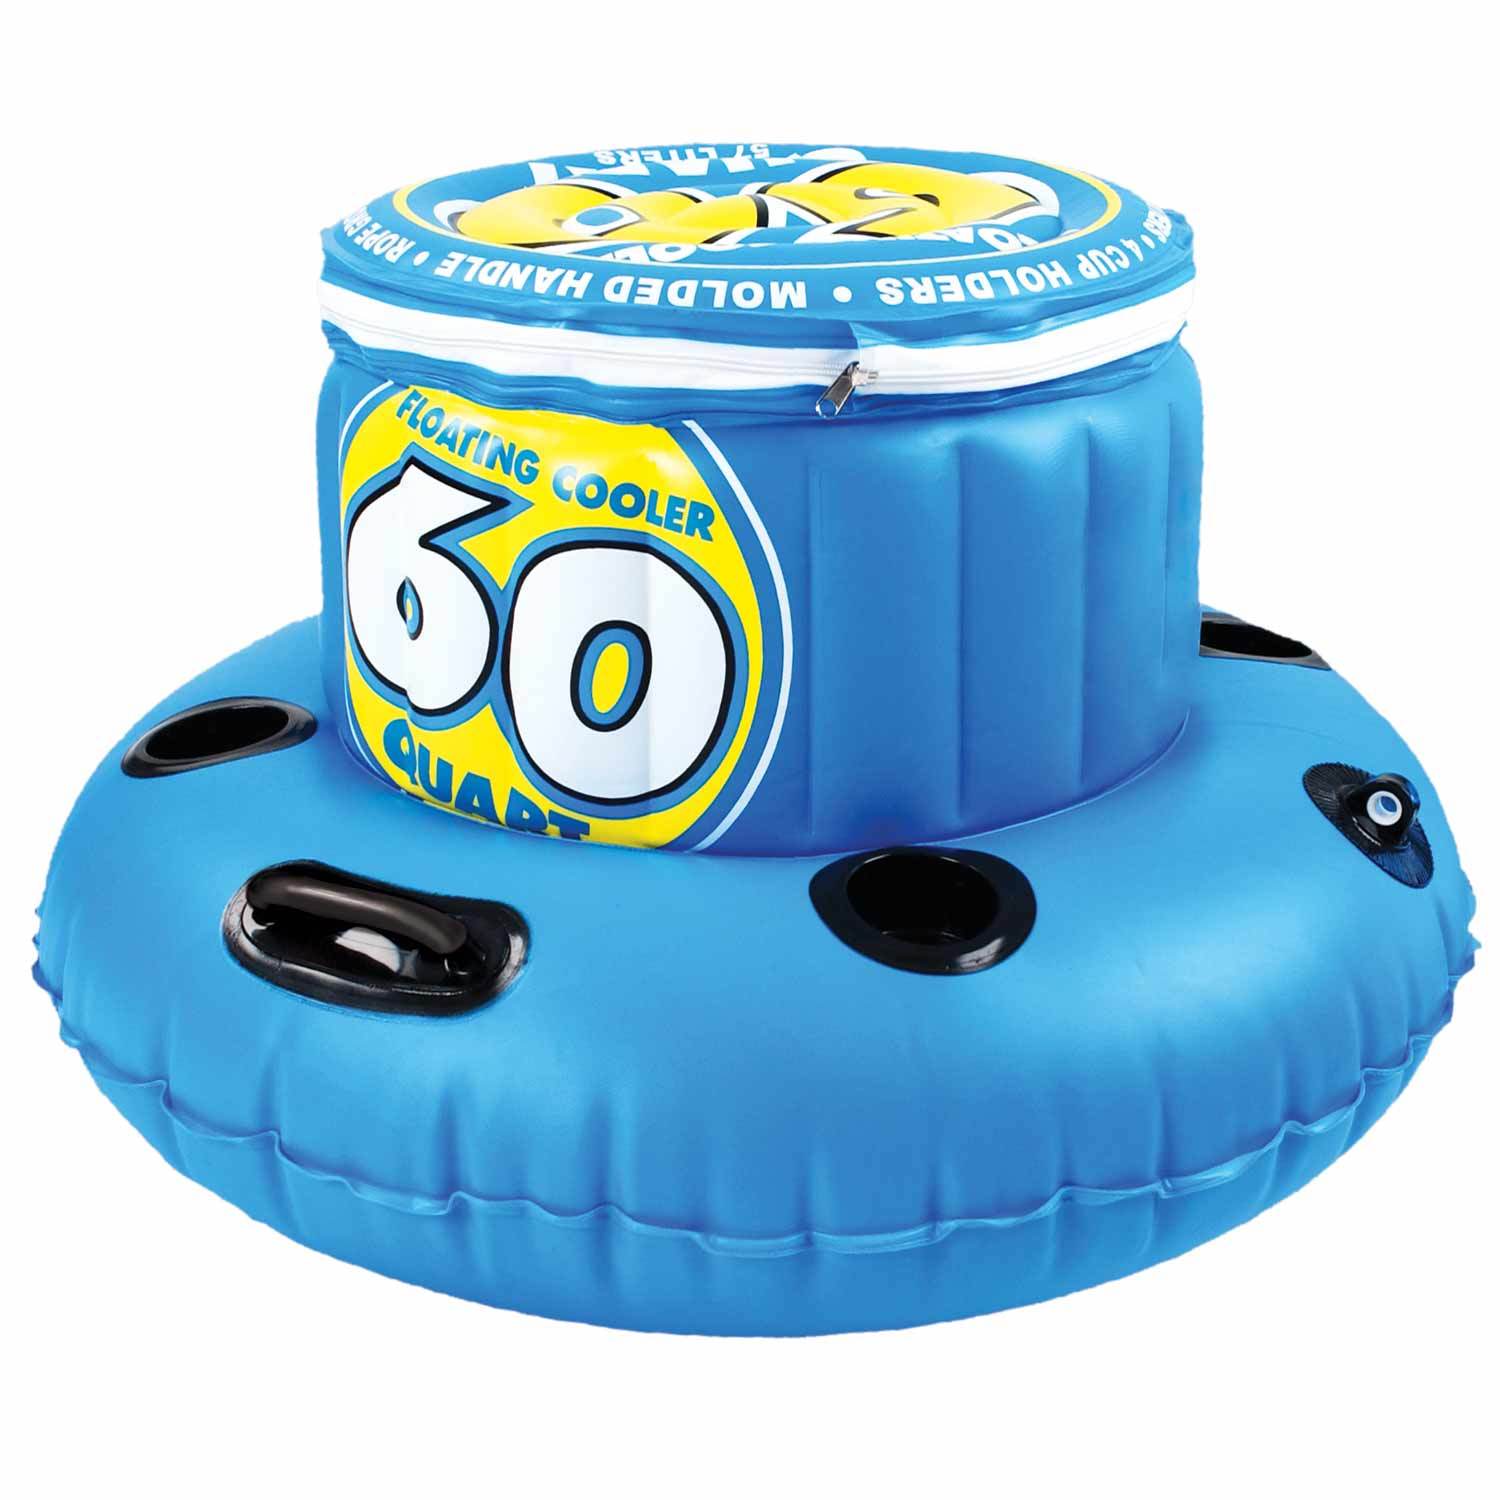 SPORTSSTUFF 60 Quart Floating Cooler   Towable Inflatable Raft 